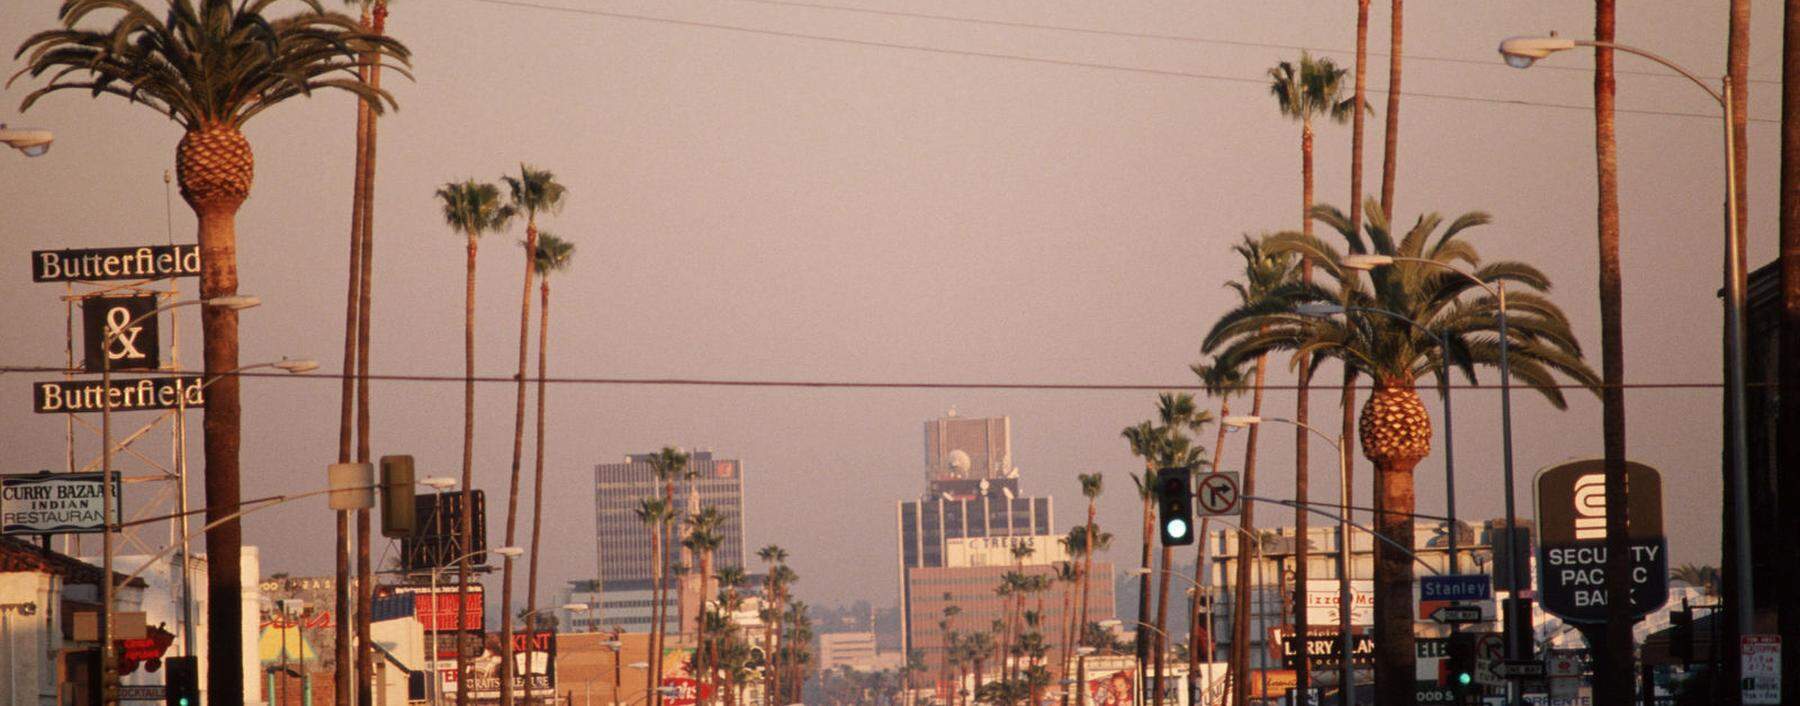 Sunset Boulevard / Los Angeles